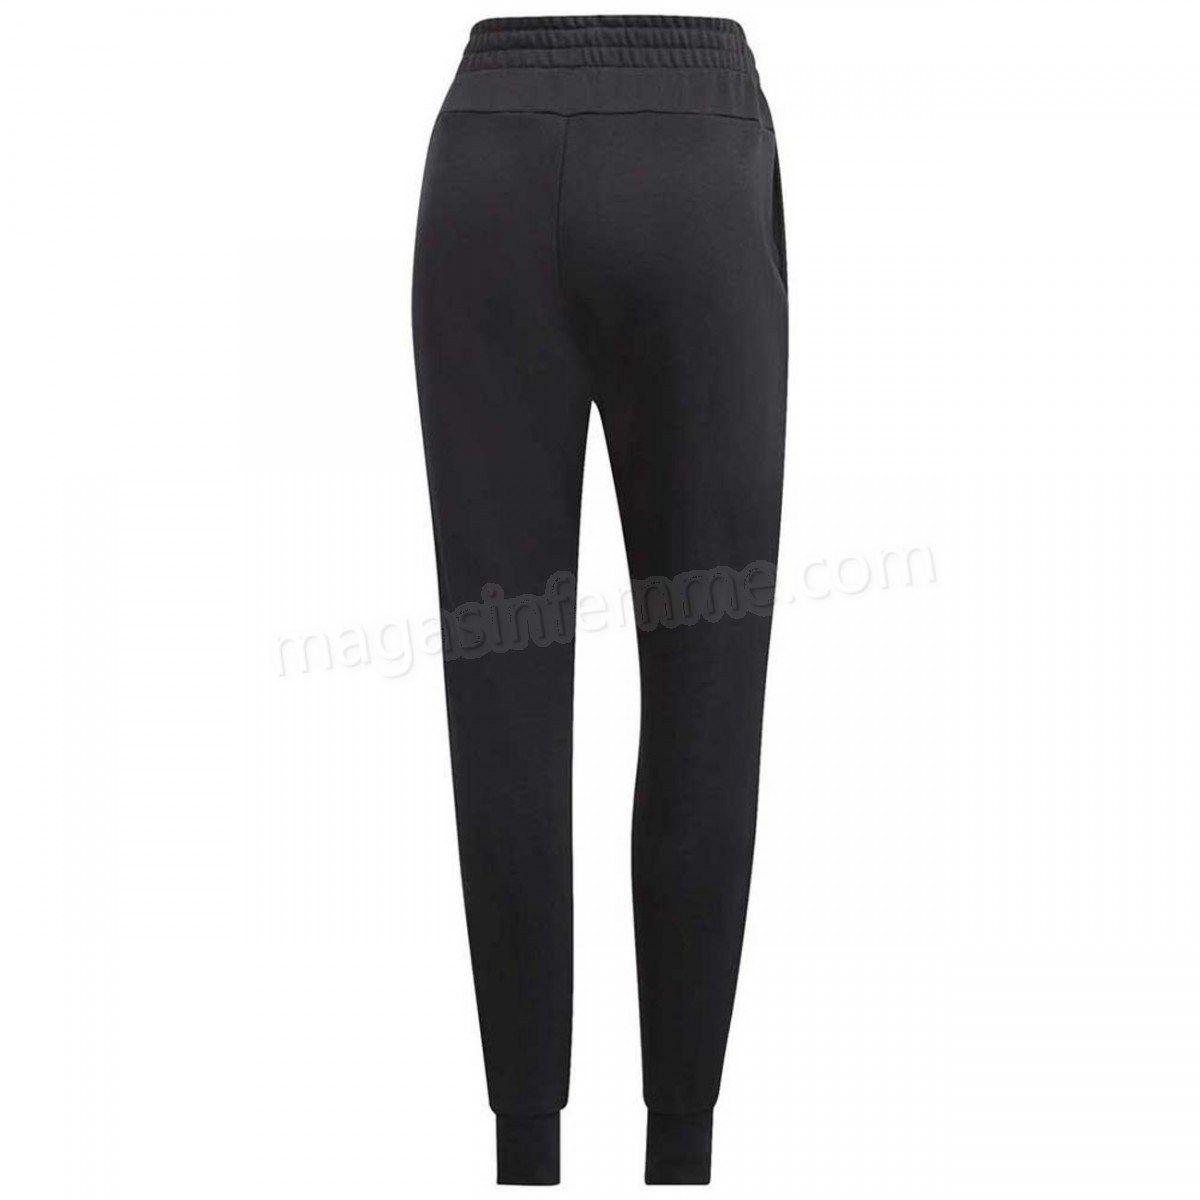 Adidas-Fitness femme ADIDAS Adidas Essentials Solid Pants Short en solde - -3